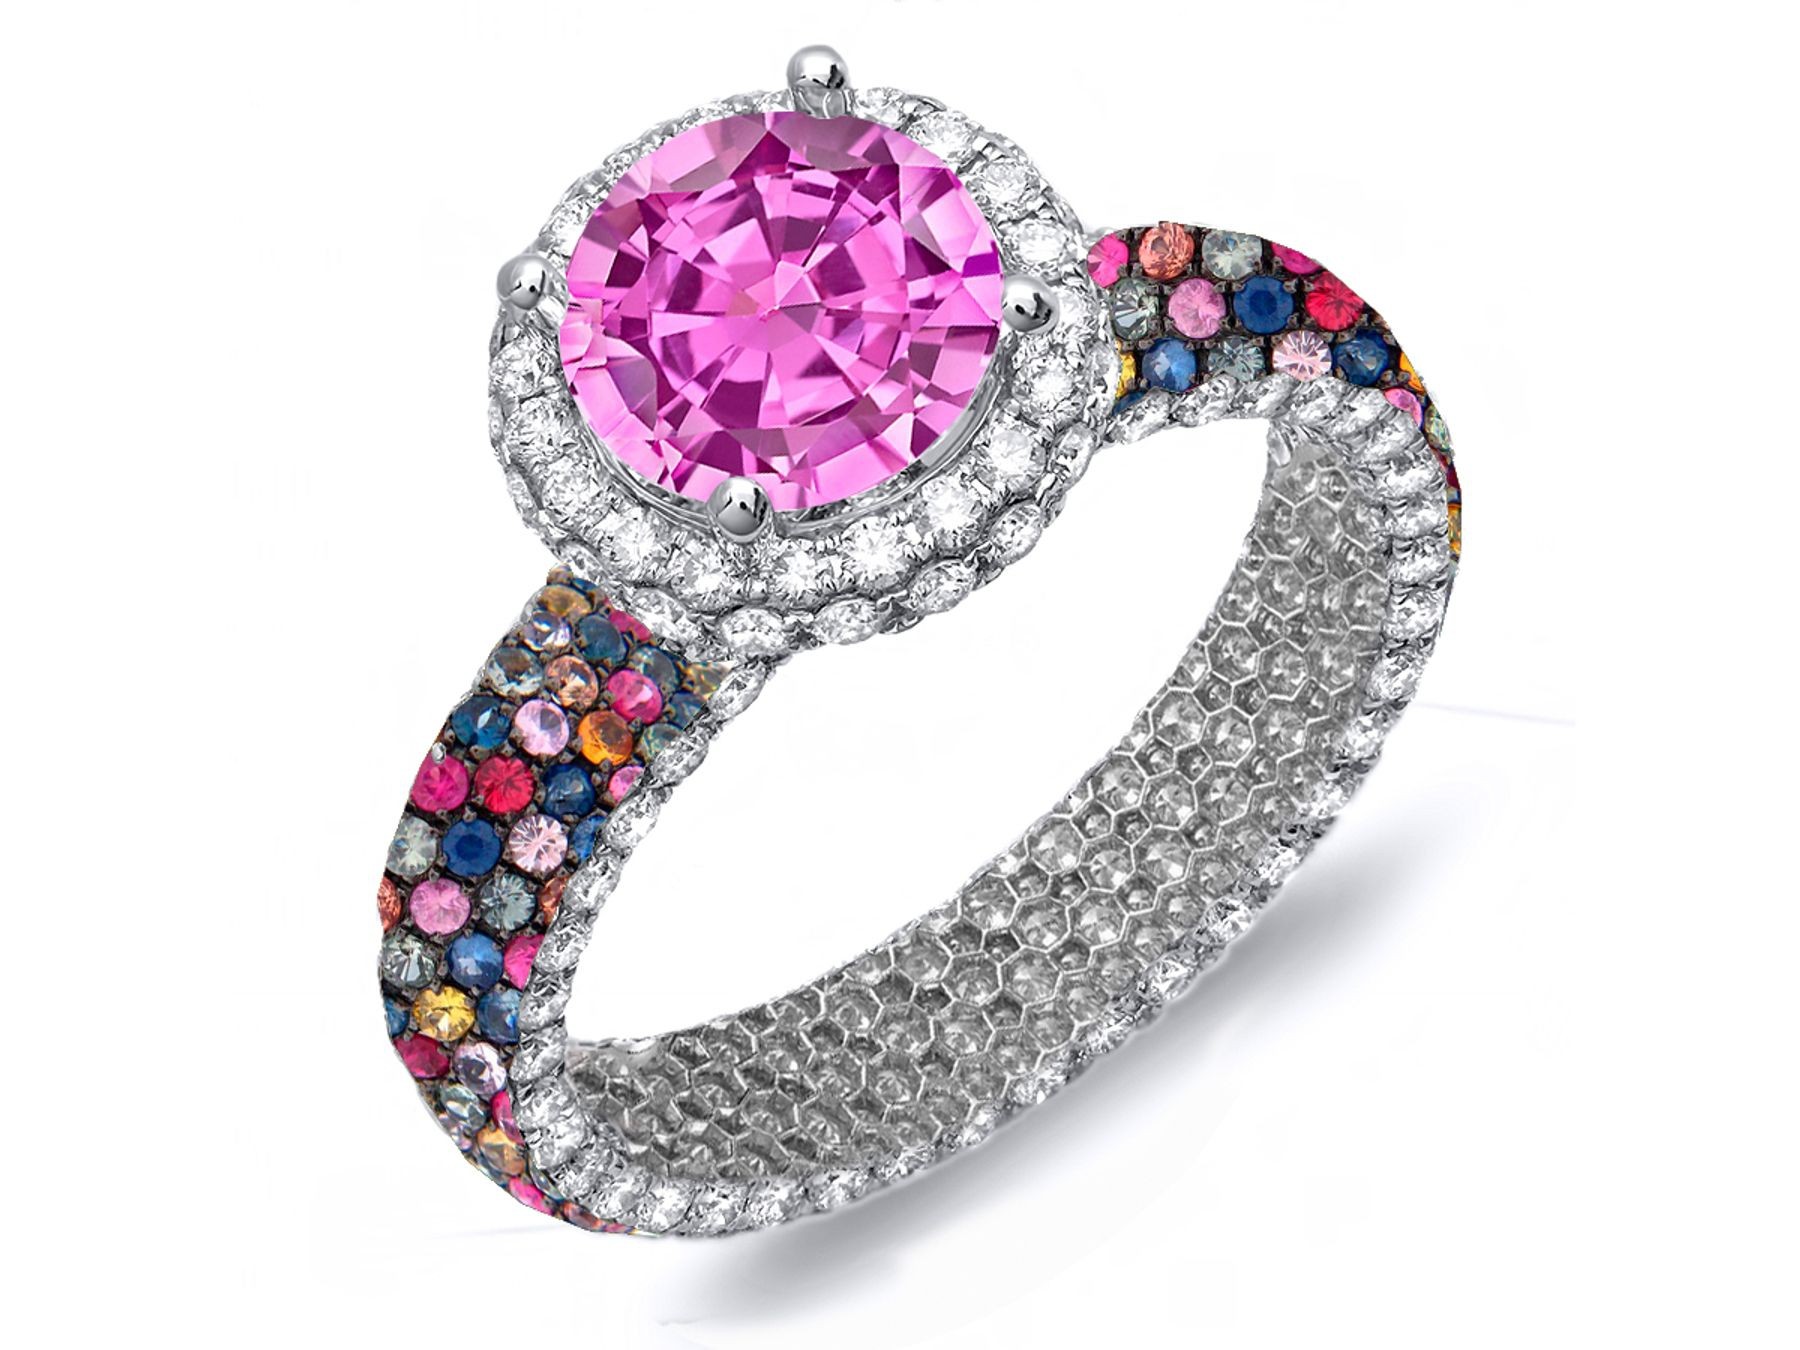 Delicate Micro Pave Cluster Diamond & Multi-Colored Precious Stones Rubies, Emeralds & Blue, Pink, Purple, Yellow Sapphires